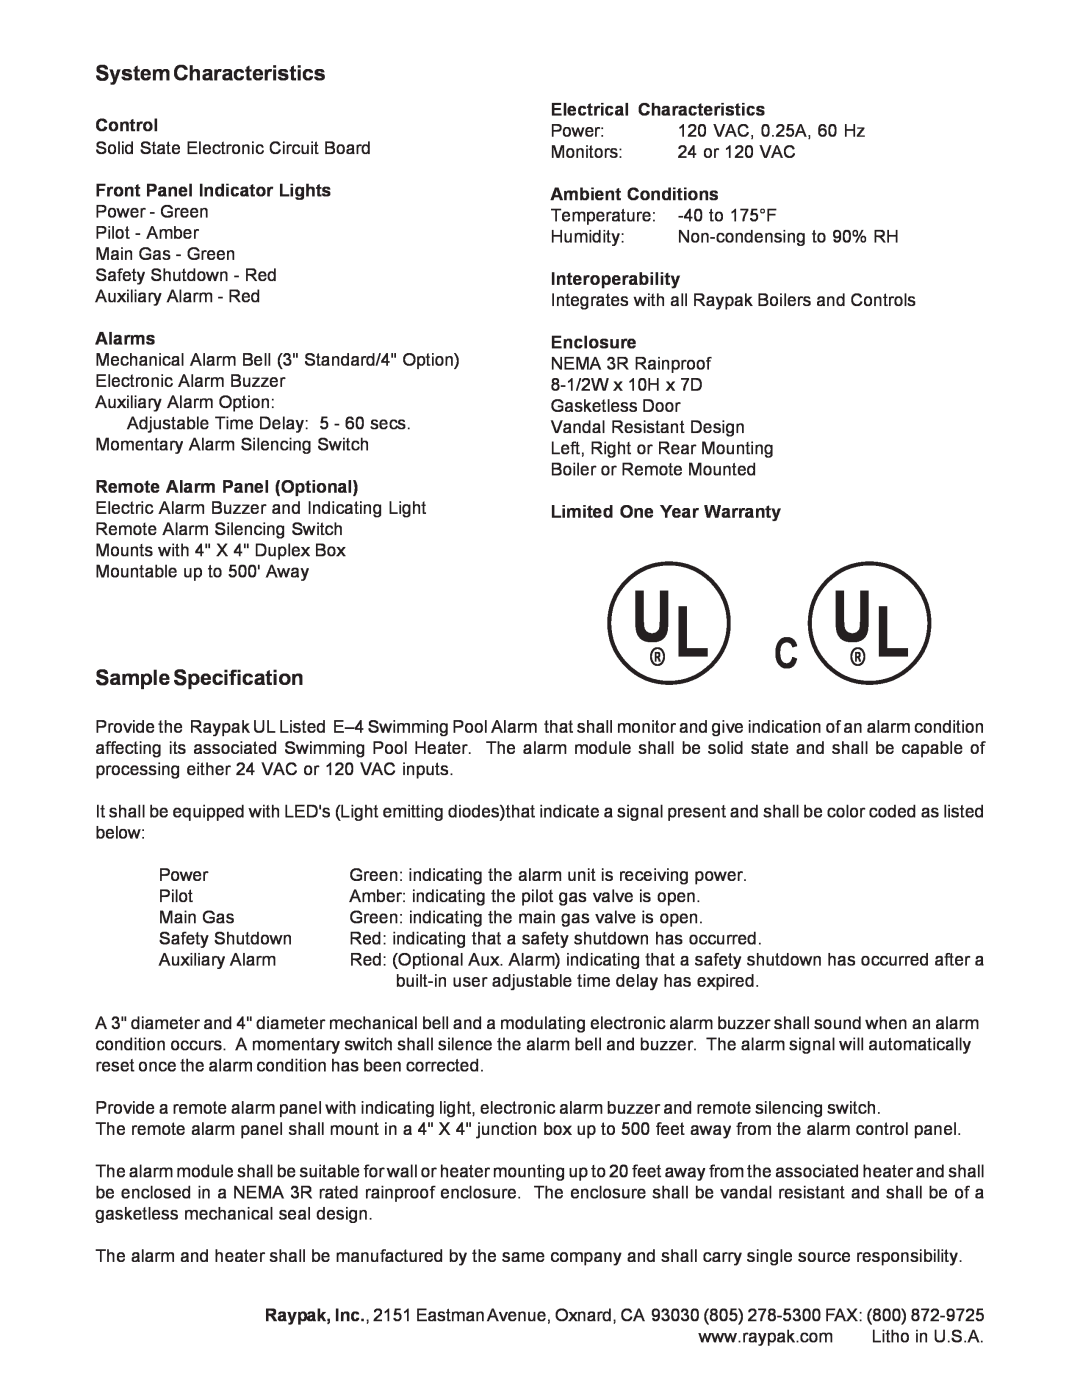 Raypak E-4 warranty System Characteristics, Sample Specification, U L C U L, Control, Front Panel Indicator Lights, Alarms 